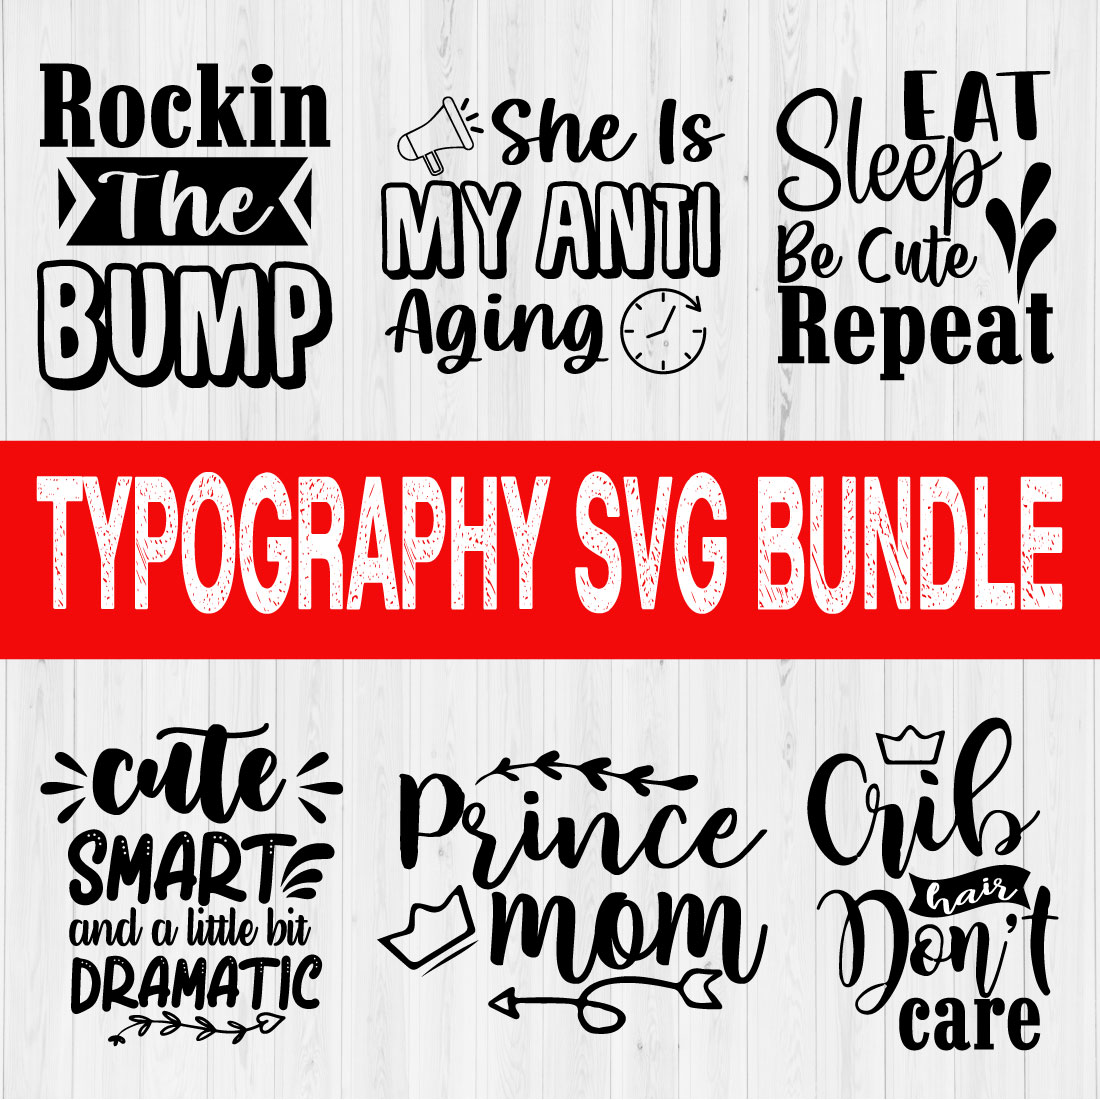 Typography Svg Bundle Vol1 preview image.